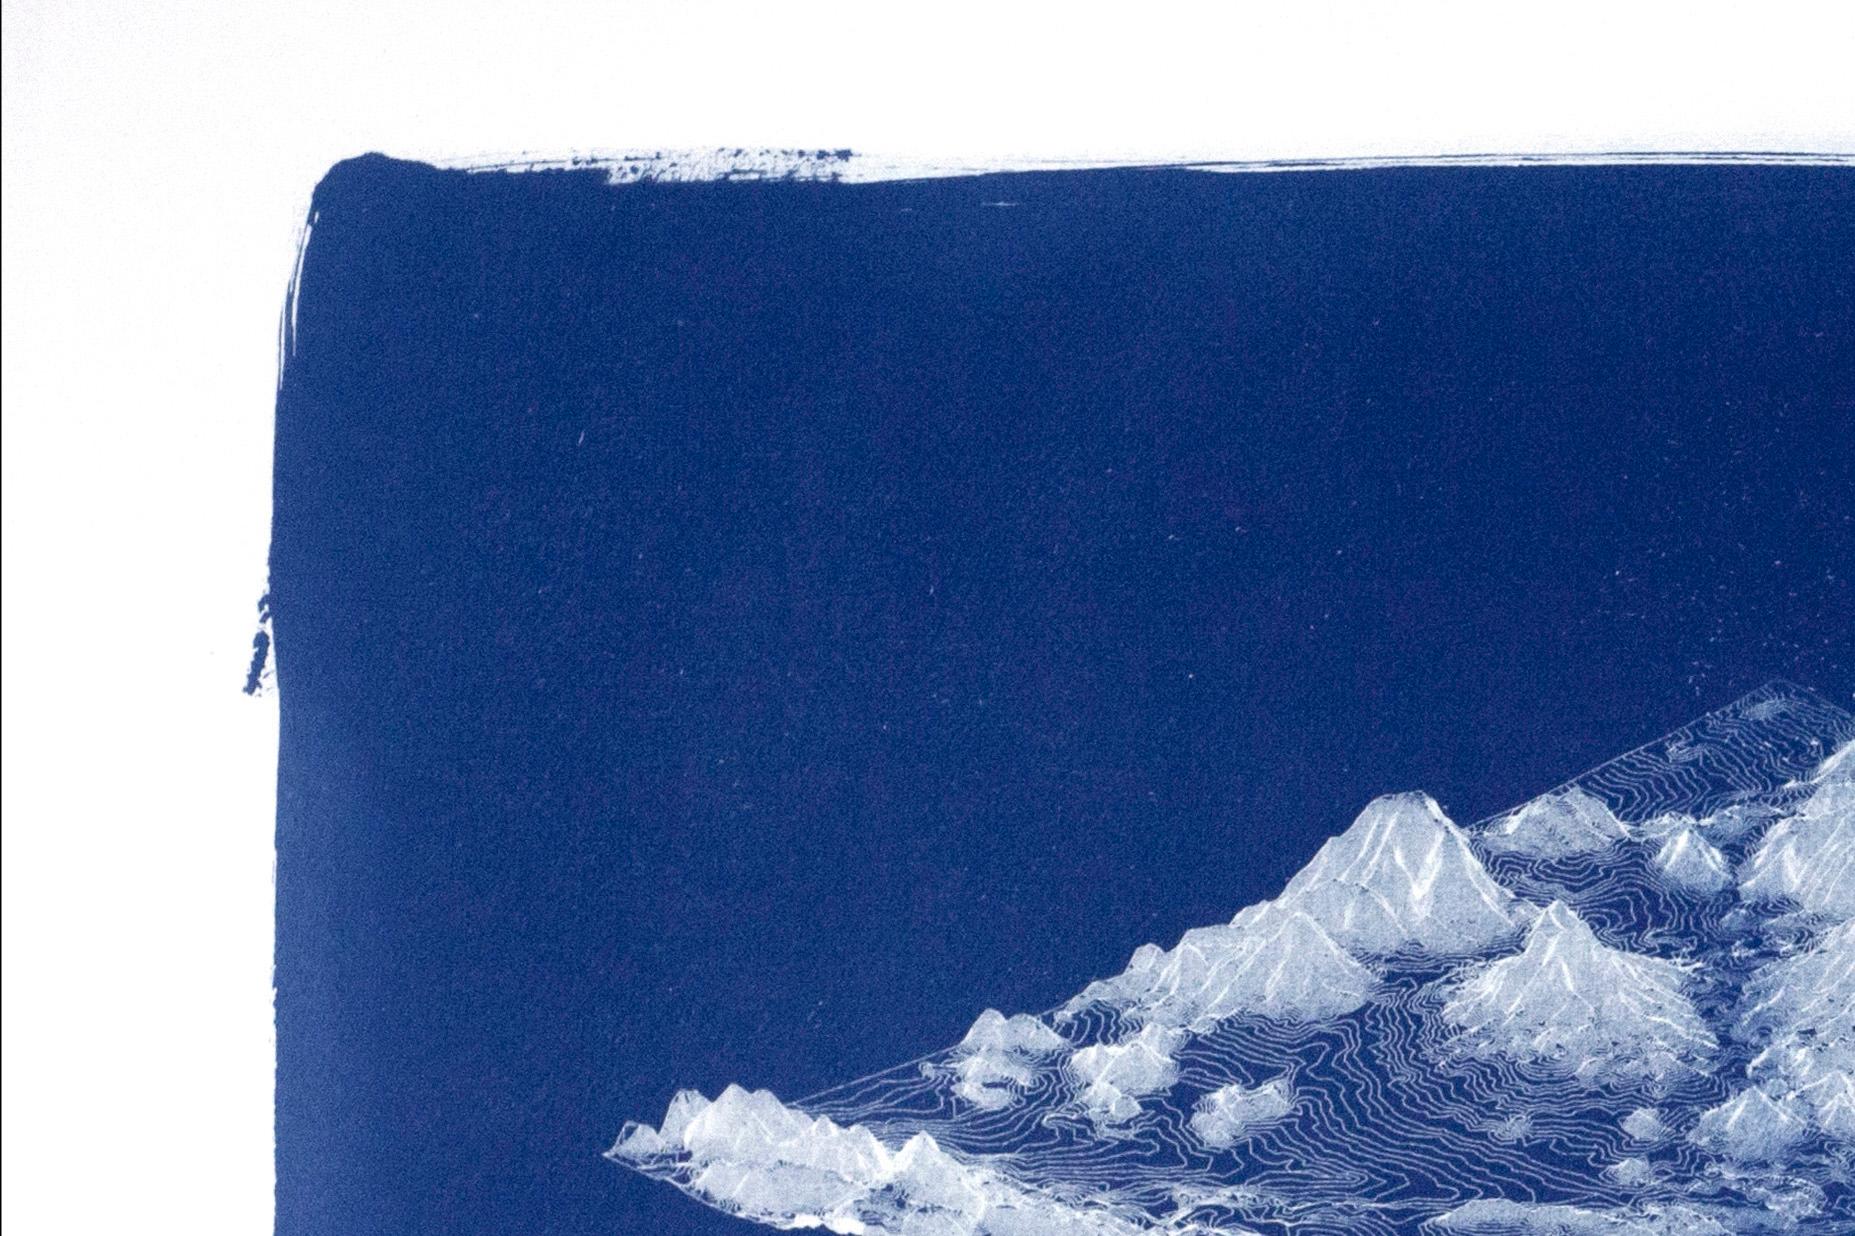 3D Render Berglandschaft, handgefertigte Cyanotypie in tiefblauen Tönen, minimalistisch  im Angebot 3